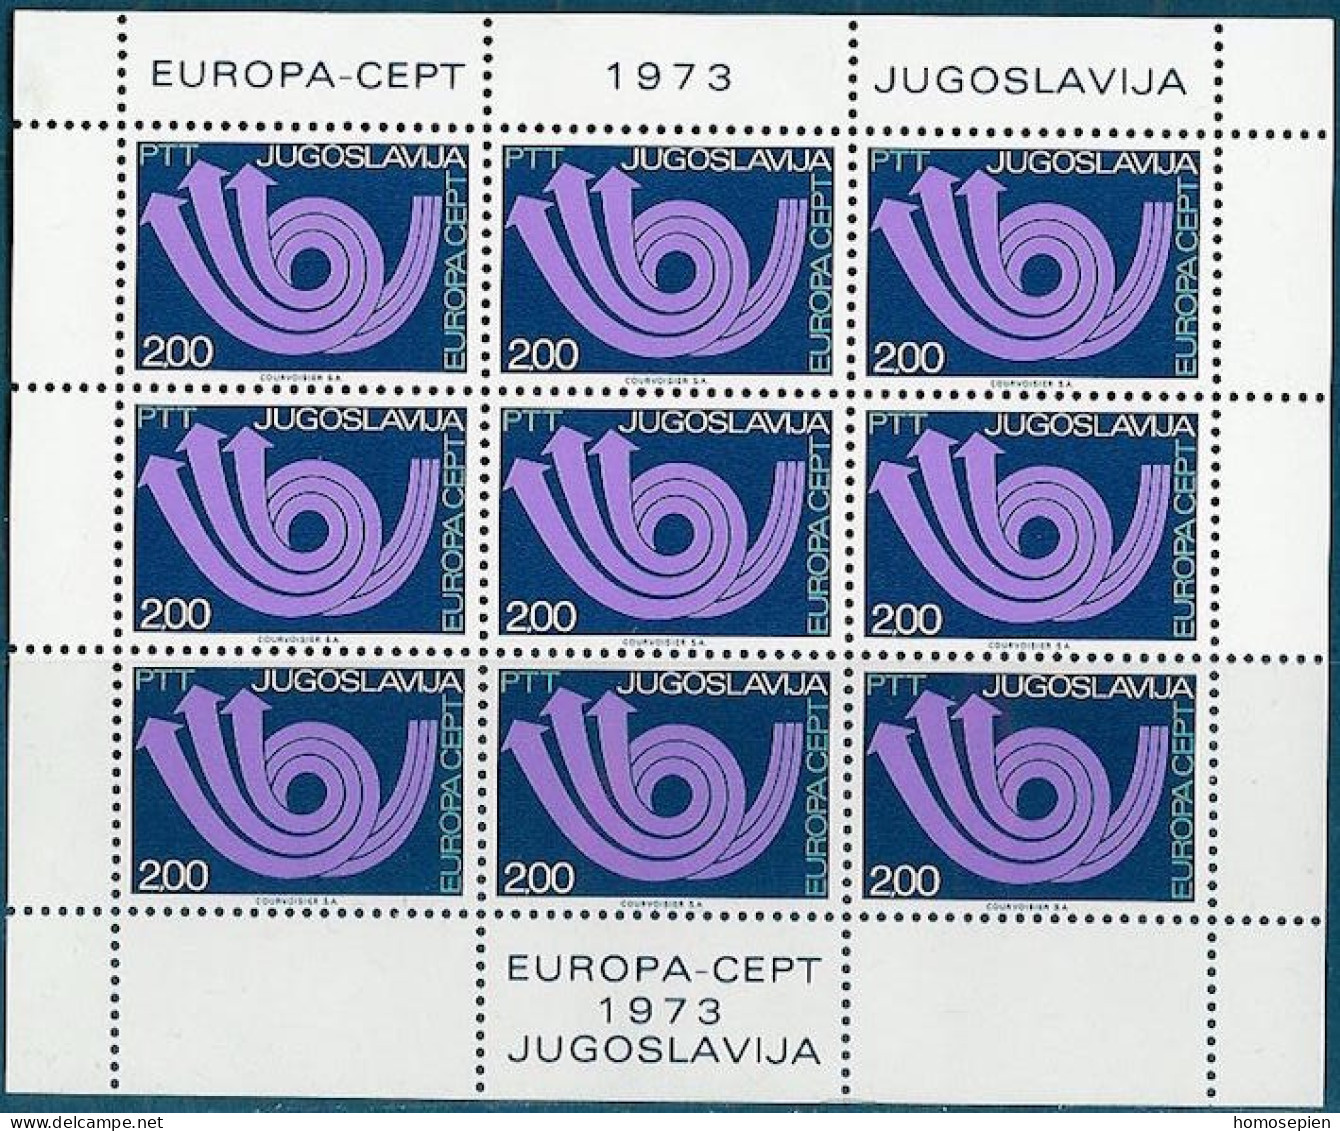 Yougoslavie - Jugoslawien - Yugoslavia Bloc Feuillet 1973 Y&T N°F1390 à F1391 - Michel N°KB1507 à KB1508 *** - EUROPA - Blocks & Sheetlets